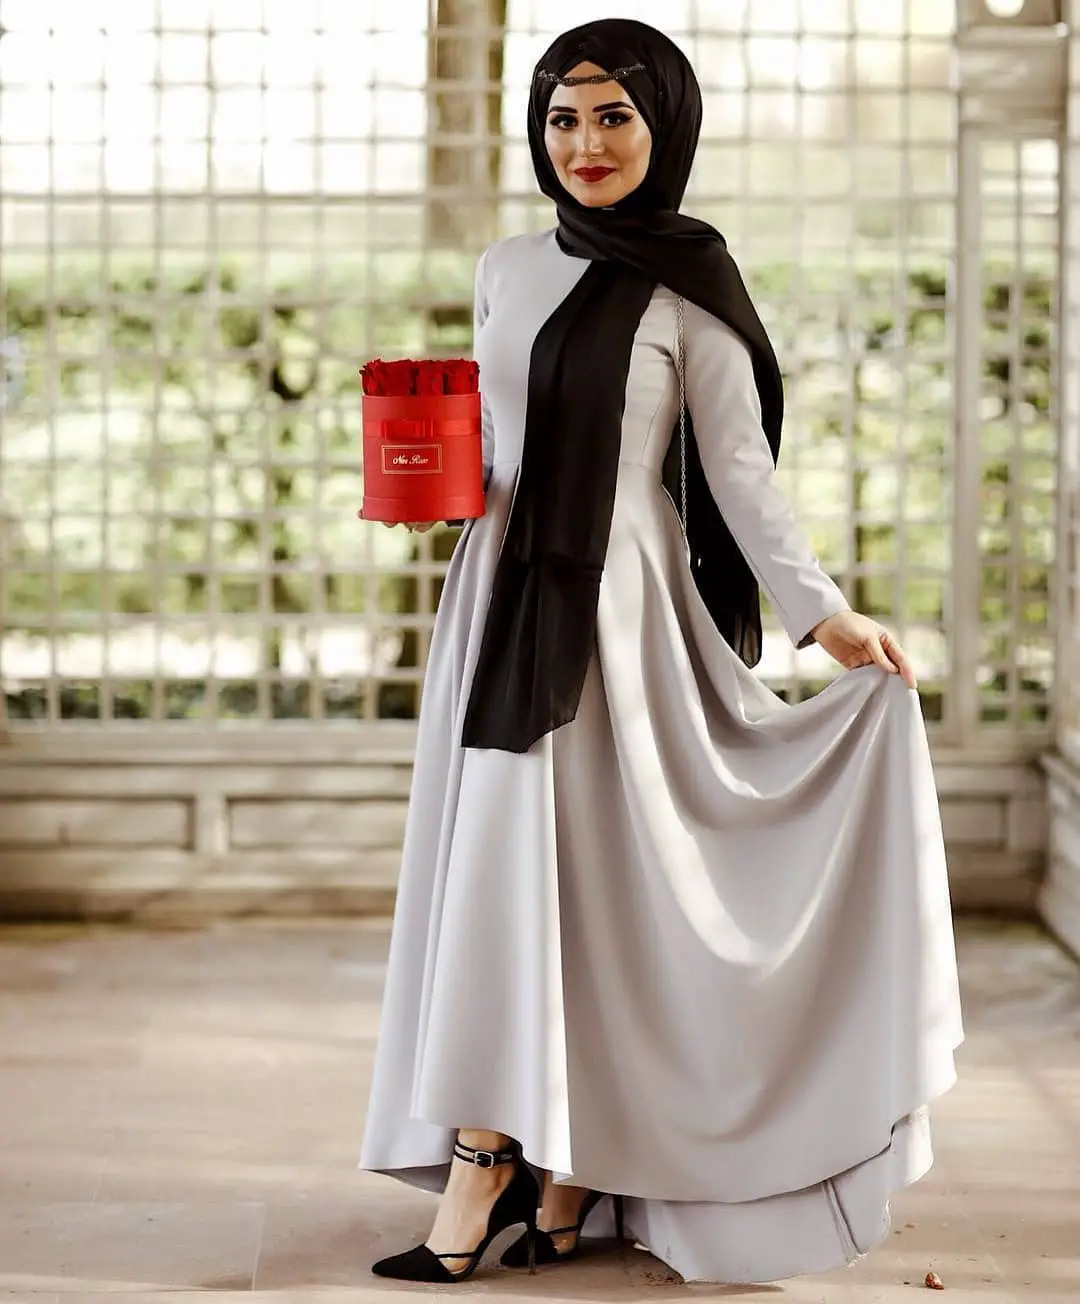 Muslim Women Hijab Styles: Volume 1